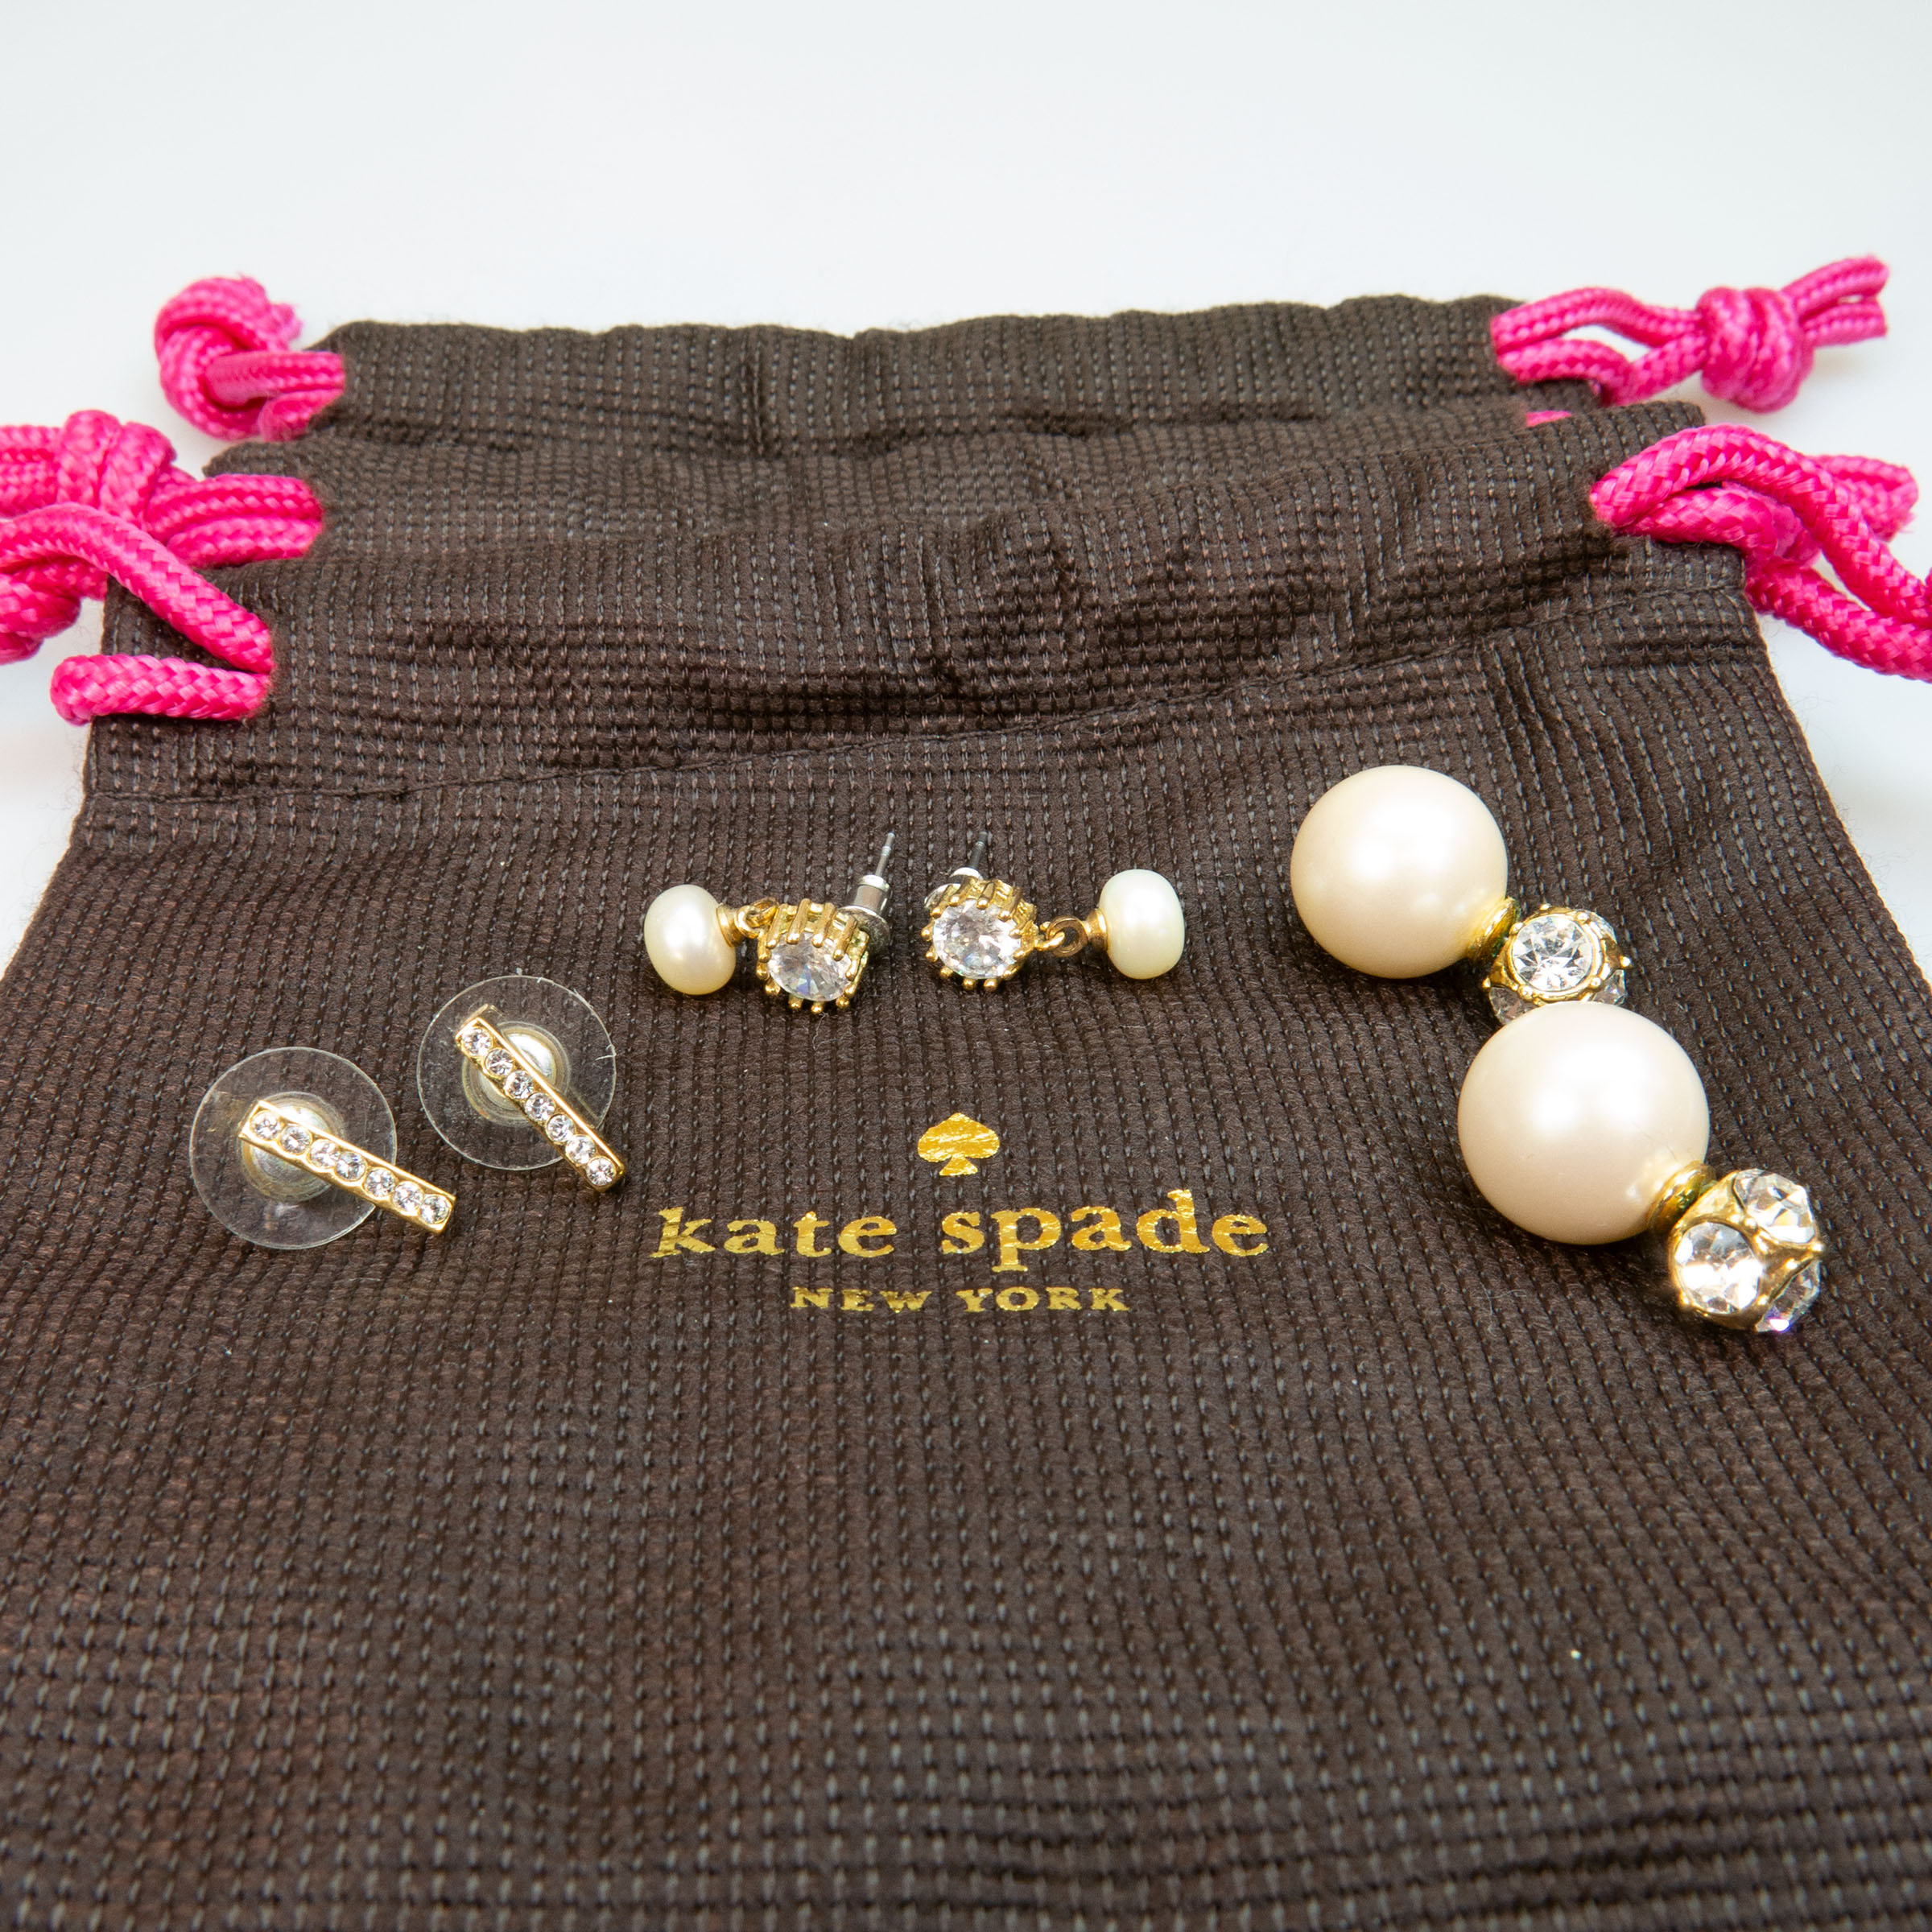 3 Pairs Of Kate Spade Gold Tone Metal Earrings